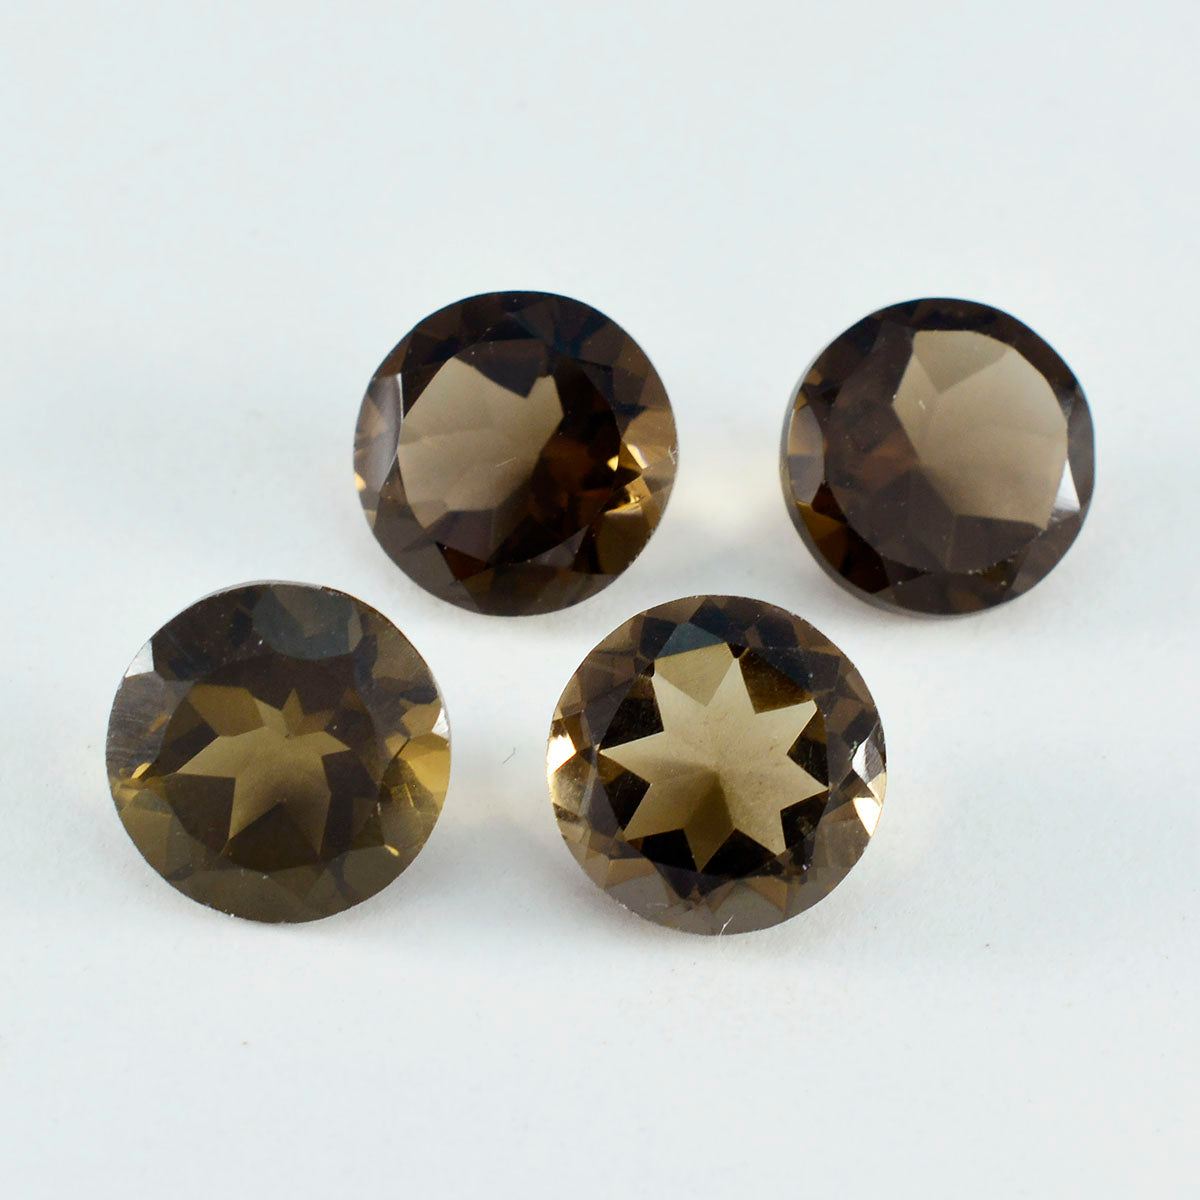 Riyogems 1PC Natural Brown Smoky Quartz Faceted 14x14 mm Round Shape pretty Quality Loose Gemstone